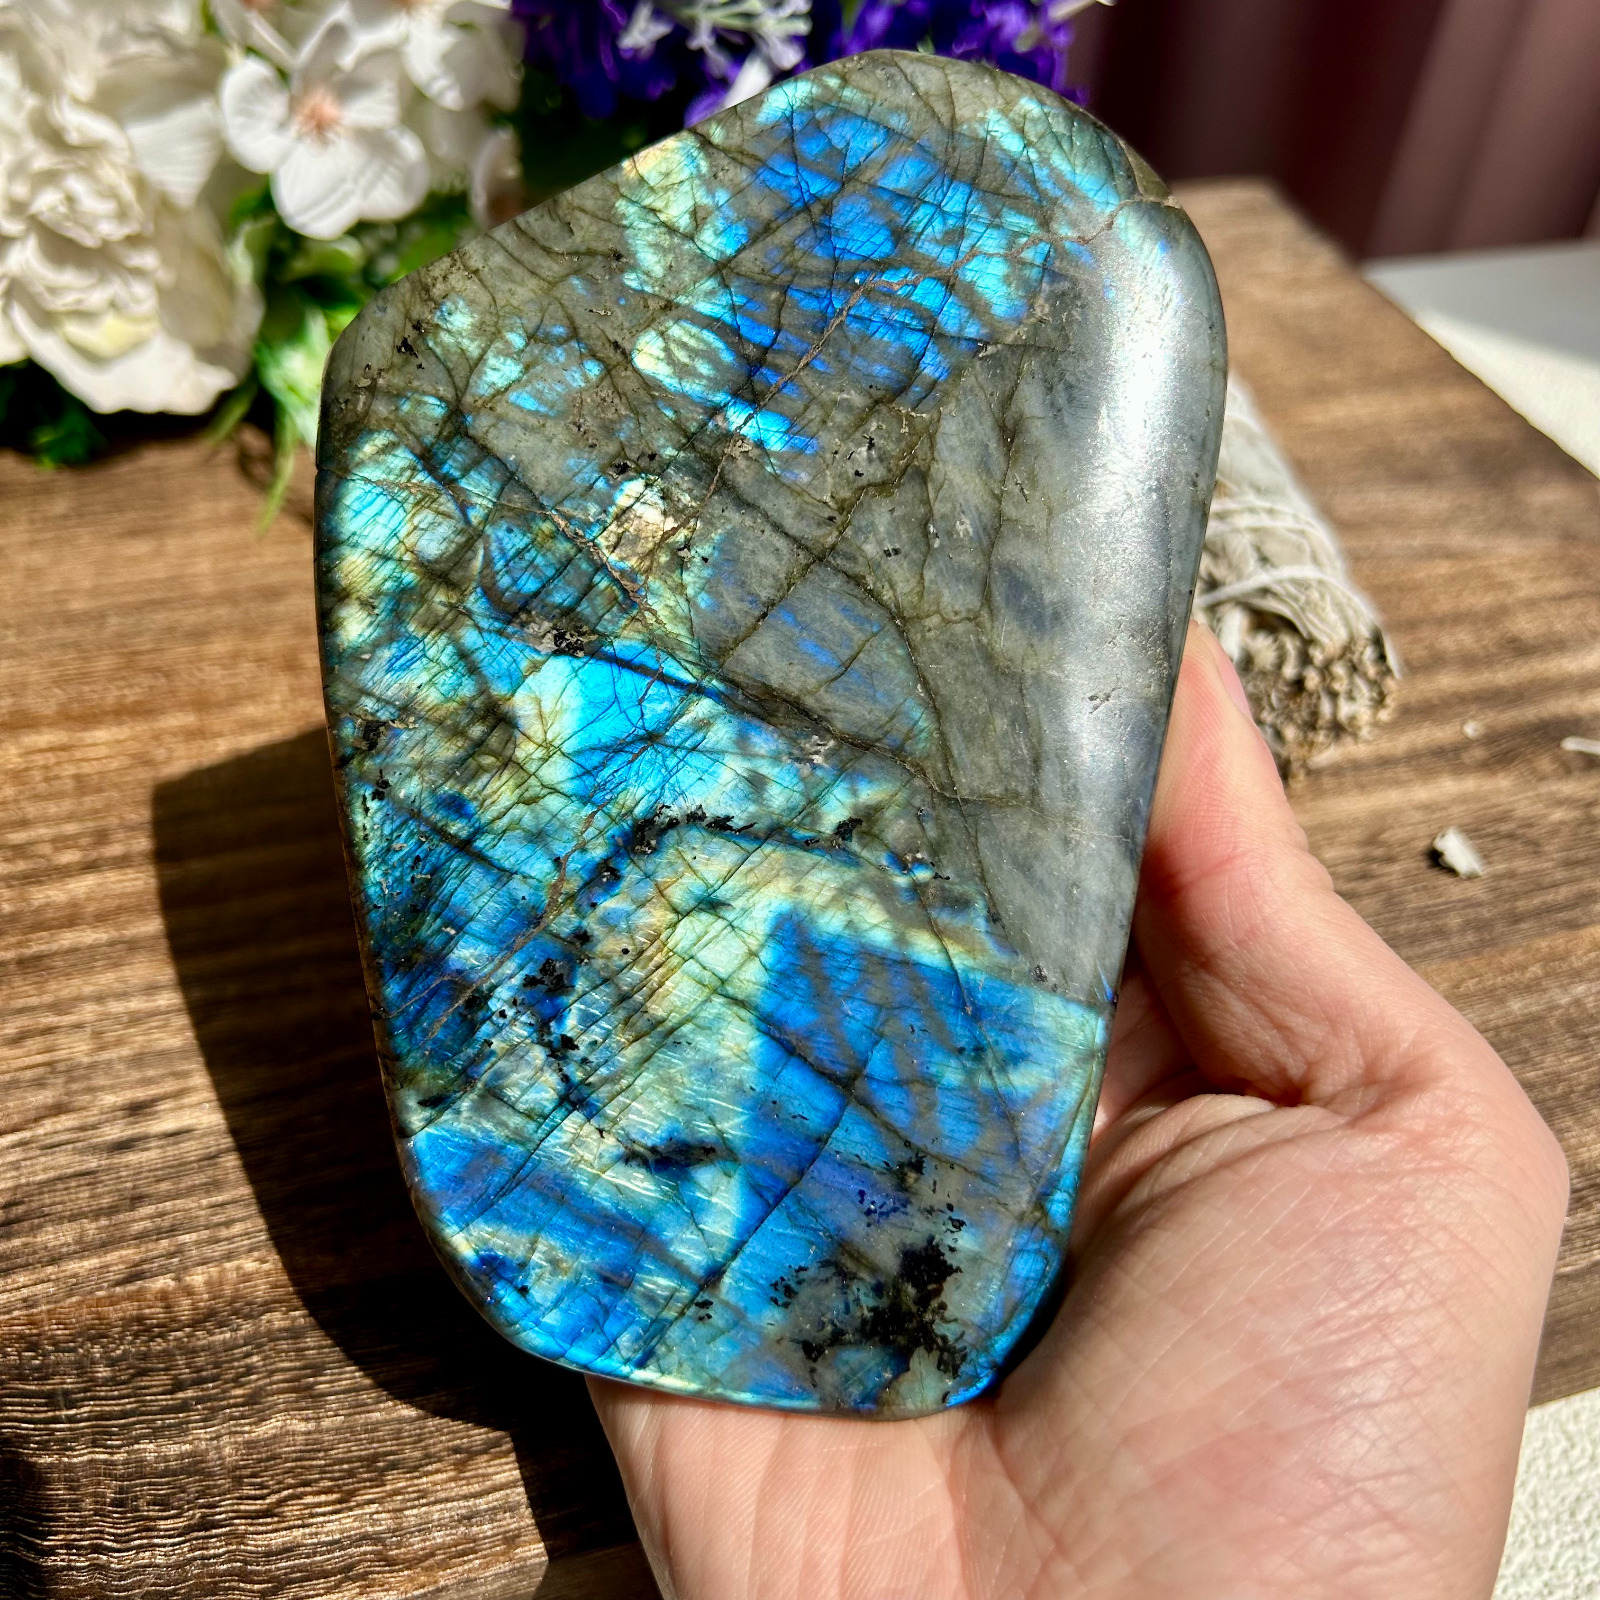 780g Amazing Flashy Labradorite Freeform Quartz Crystal display Healing